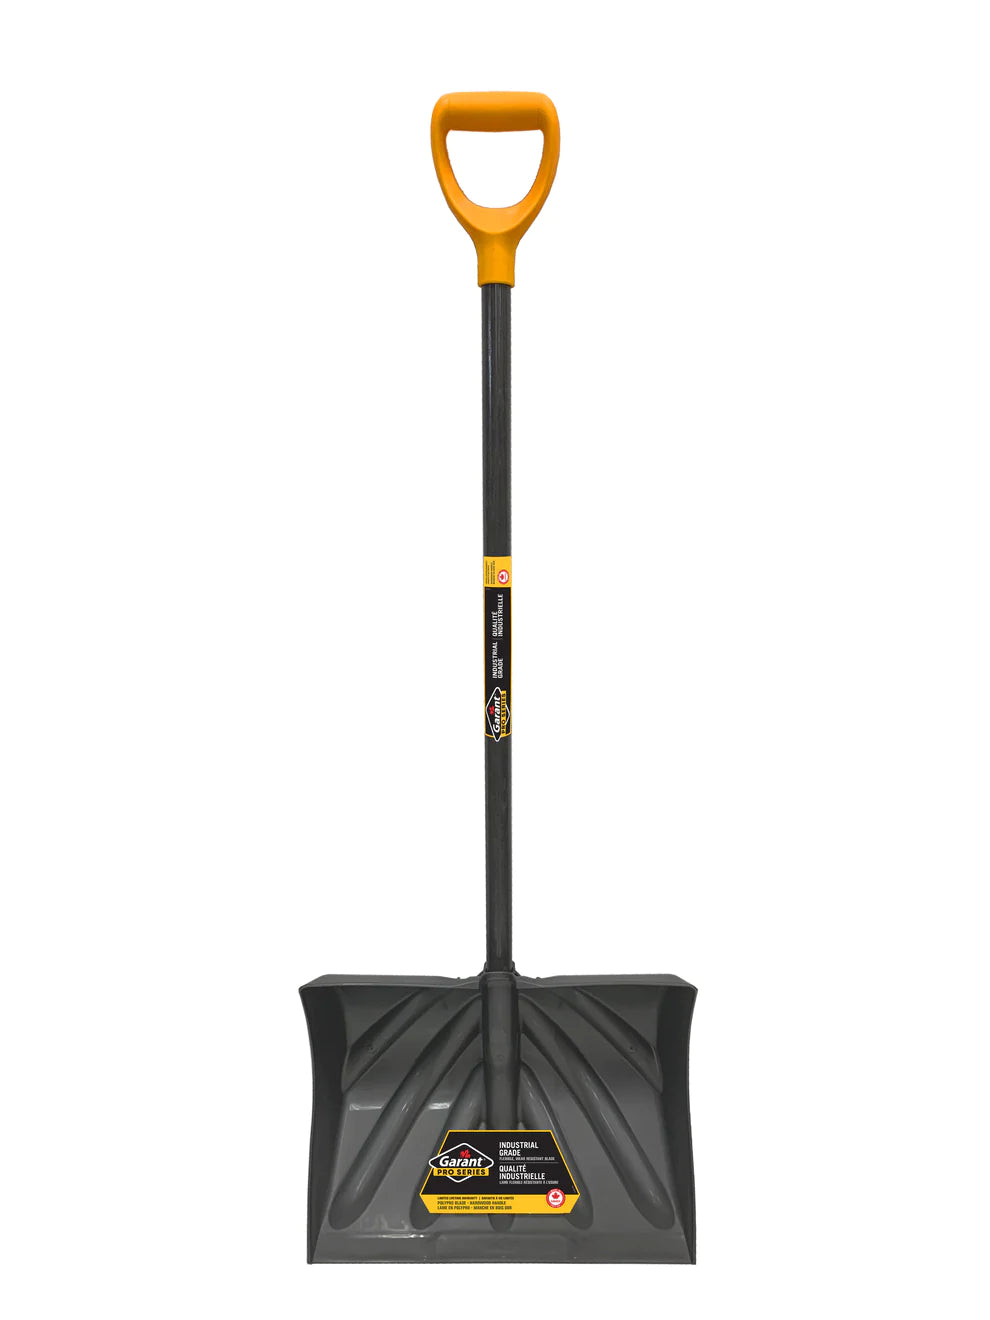 Snow shovel, 18-inch polypro blade